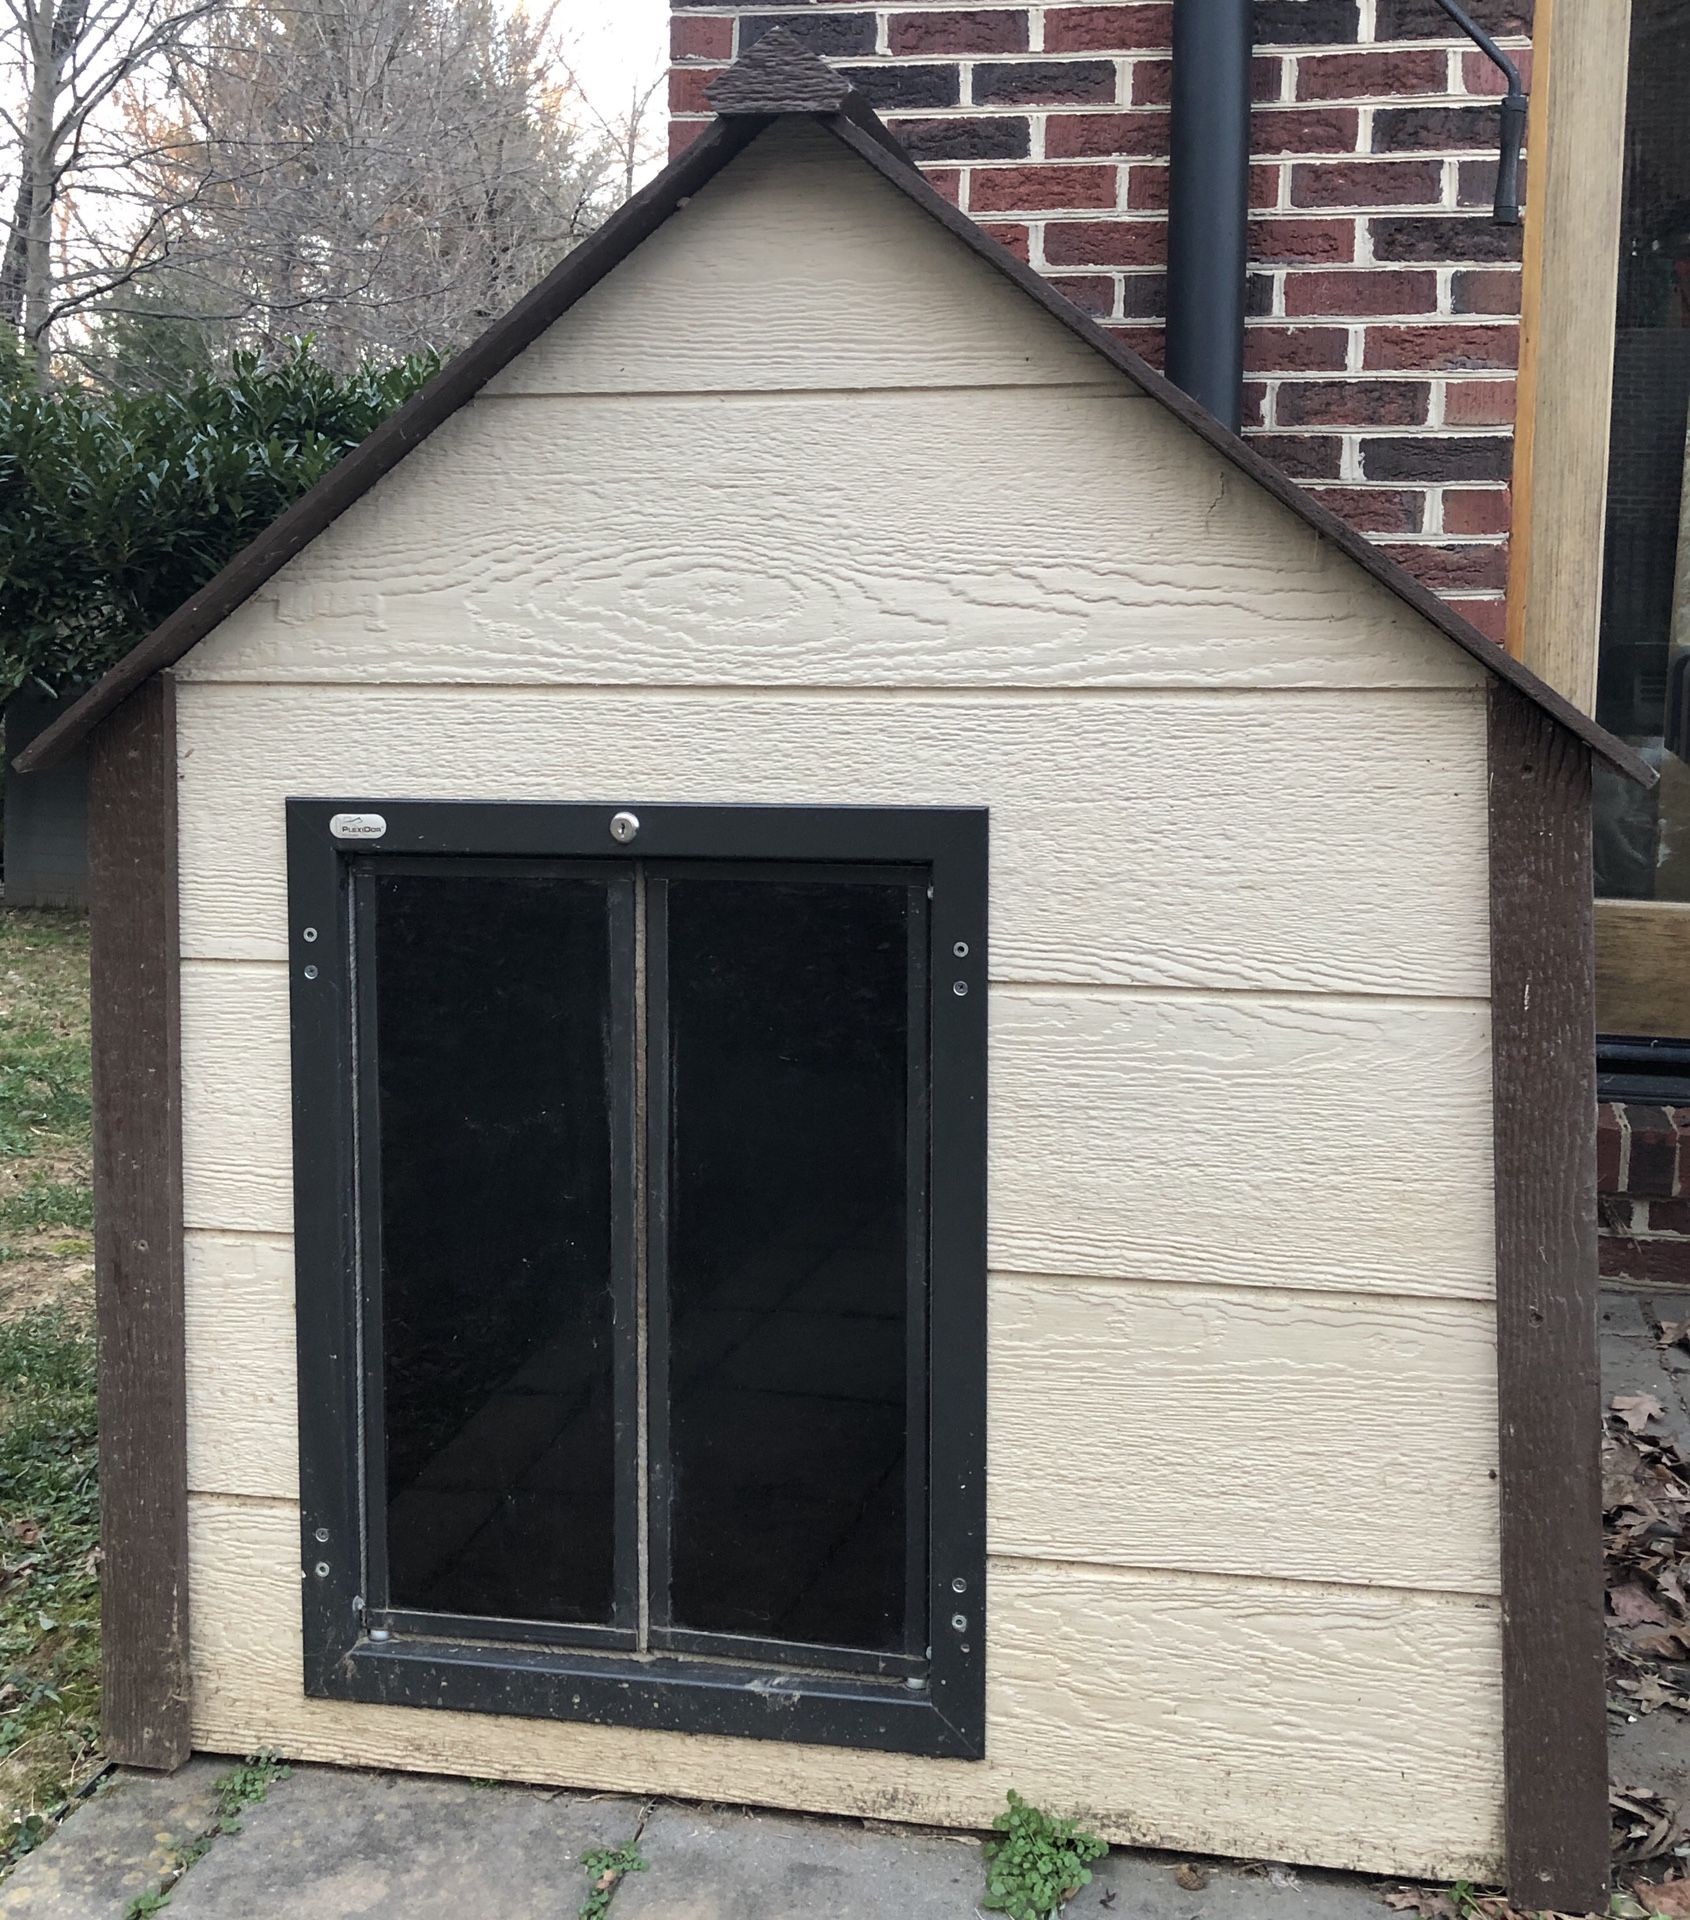 Large dog house, insulated